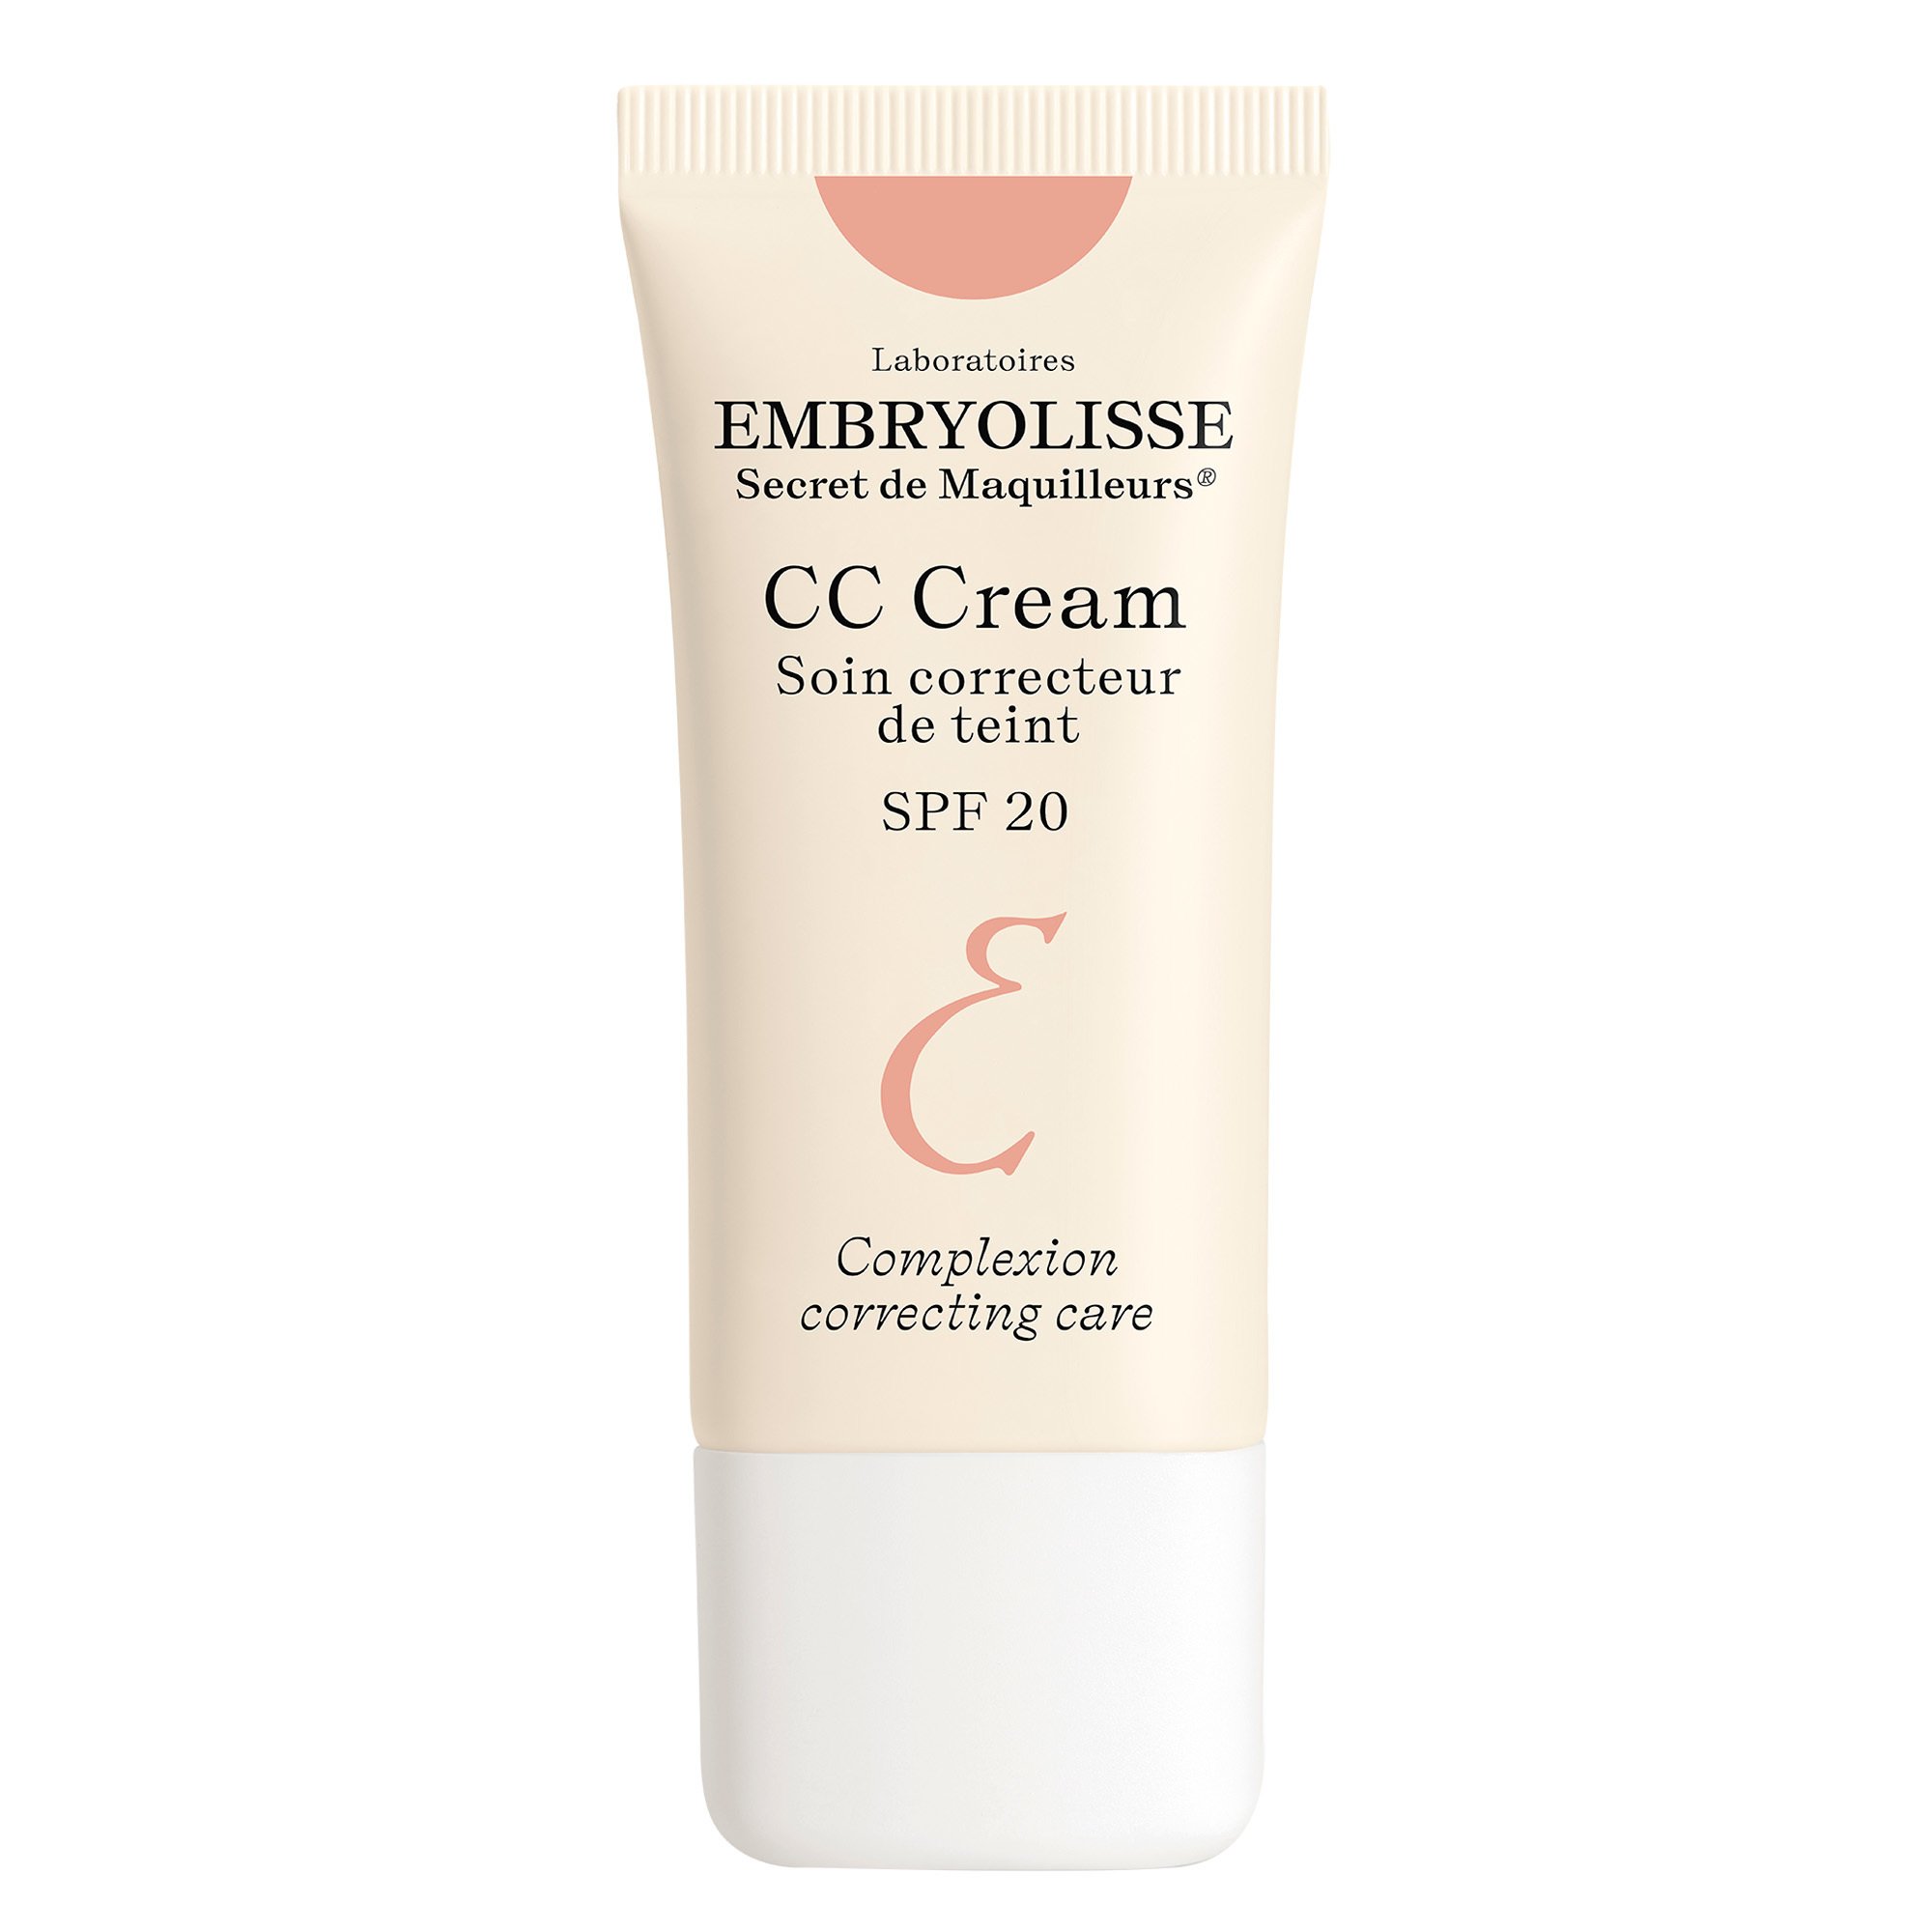 Embryolisse Complexion Correcting CC Cream SPF20, 30 ml